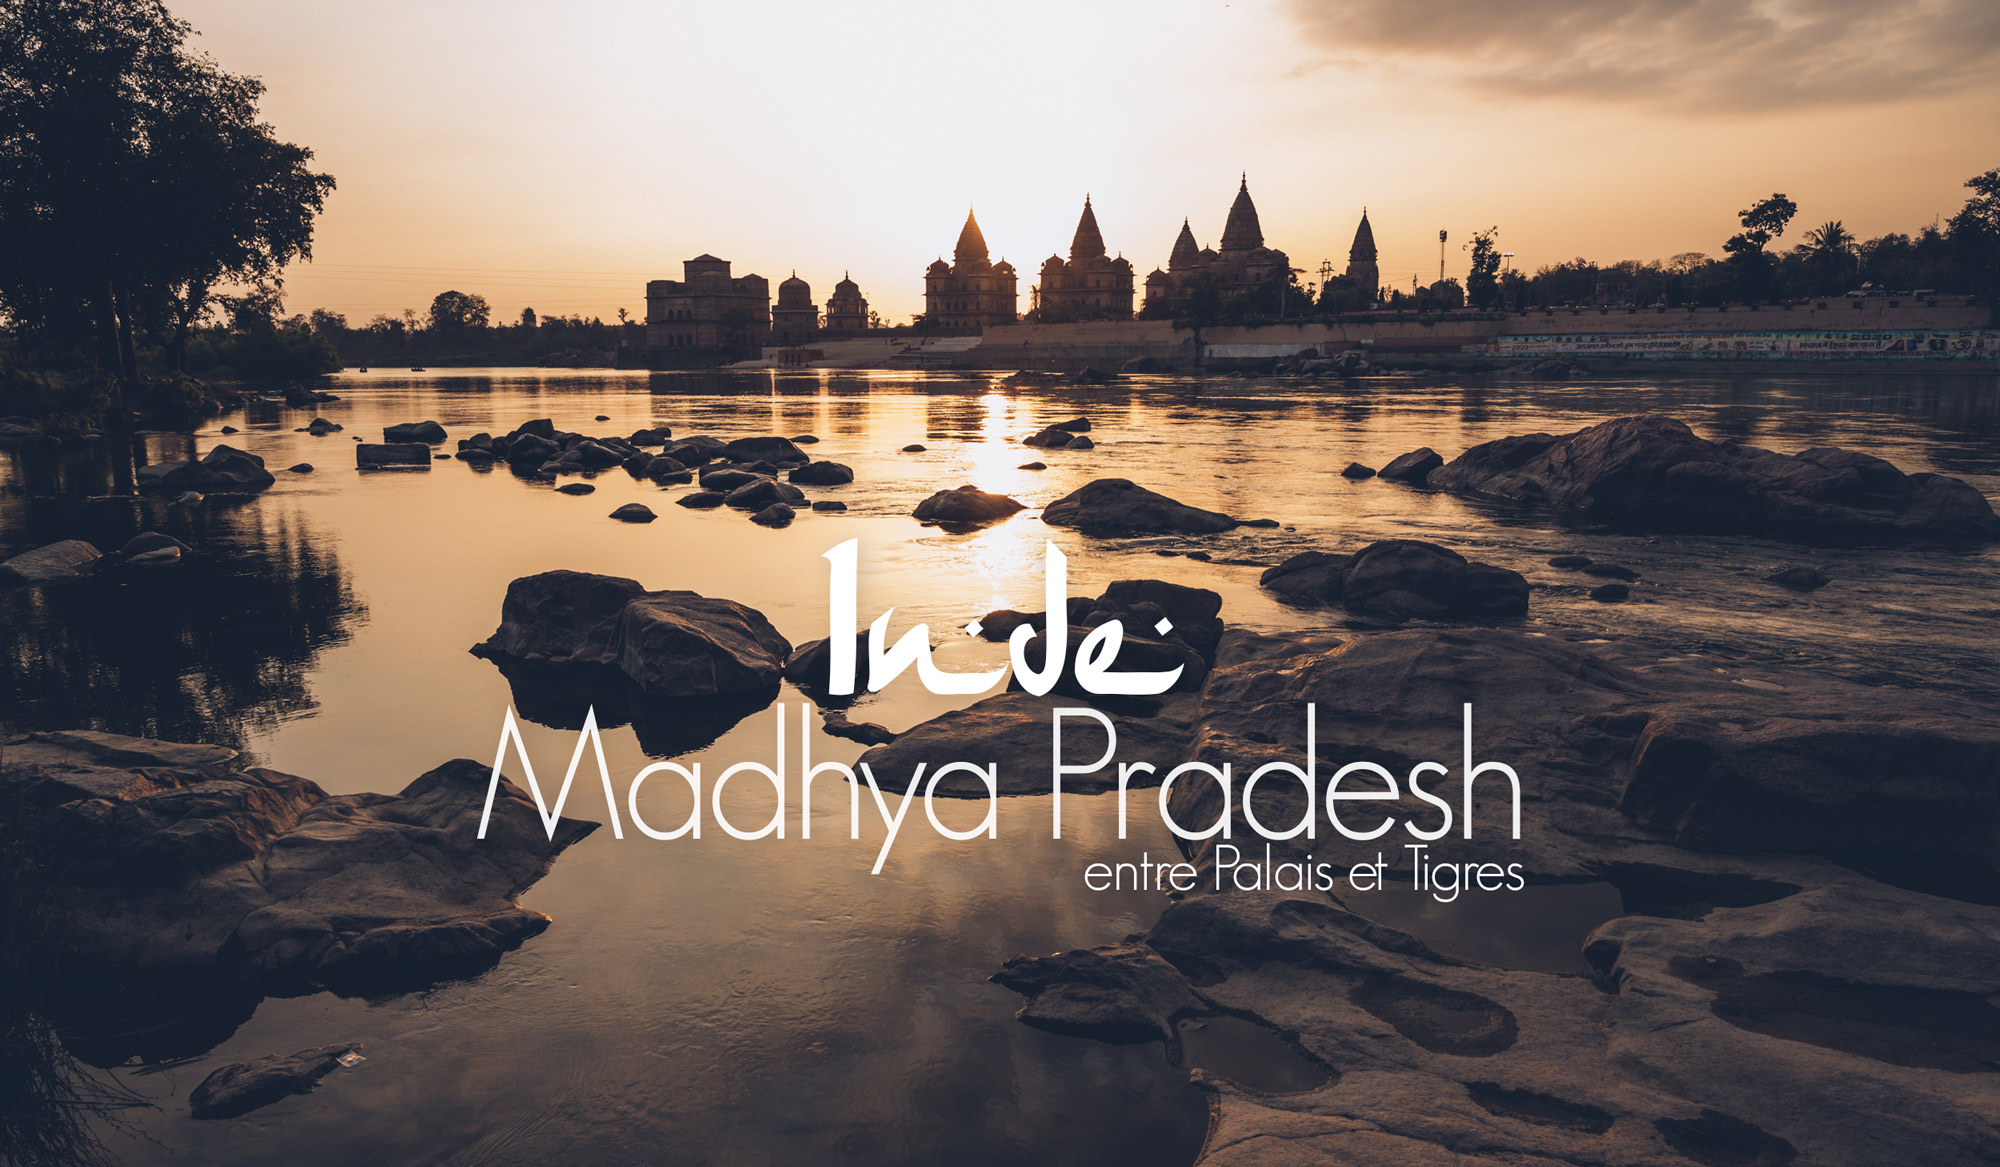 Inde, Madhya Pradesh, 12 jours entre temples et Tigres